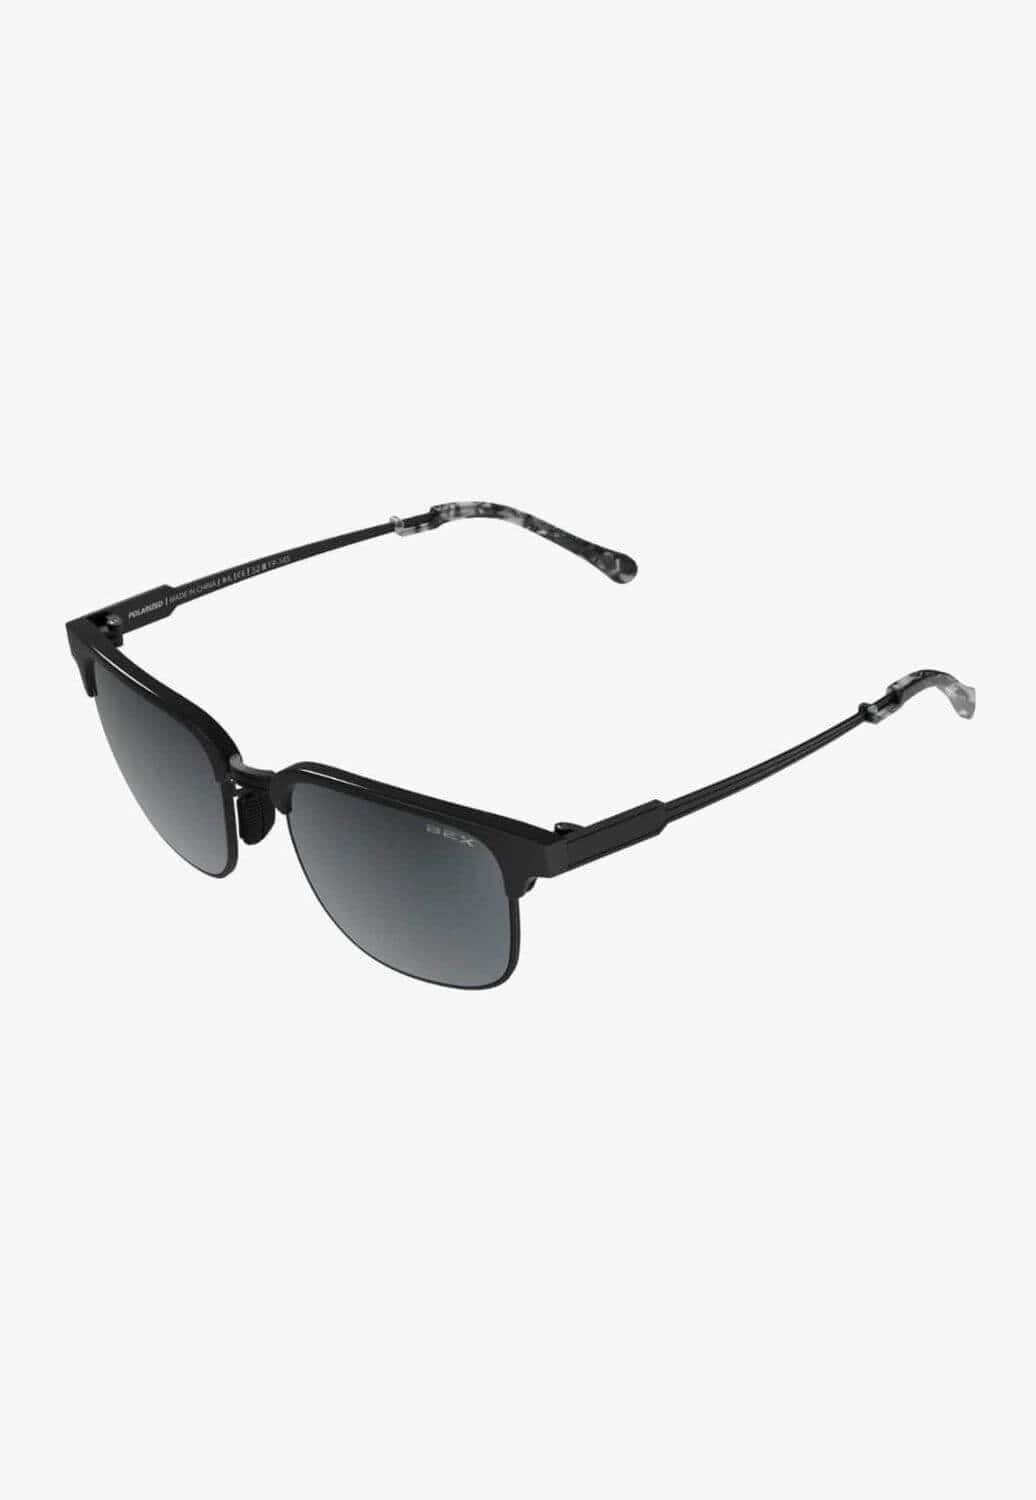 BEX ACCESSORIES-Sunglasses Black/Grey Bex Roger Sunglasses